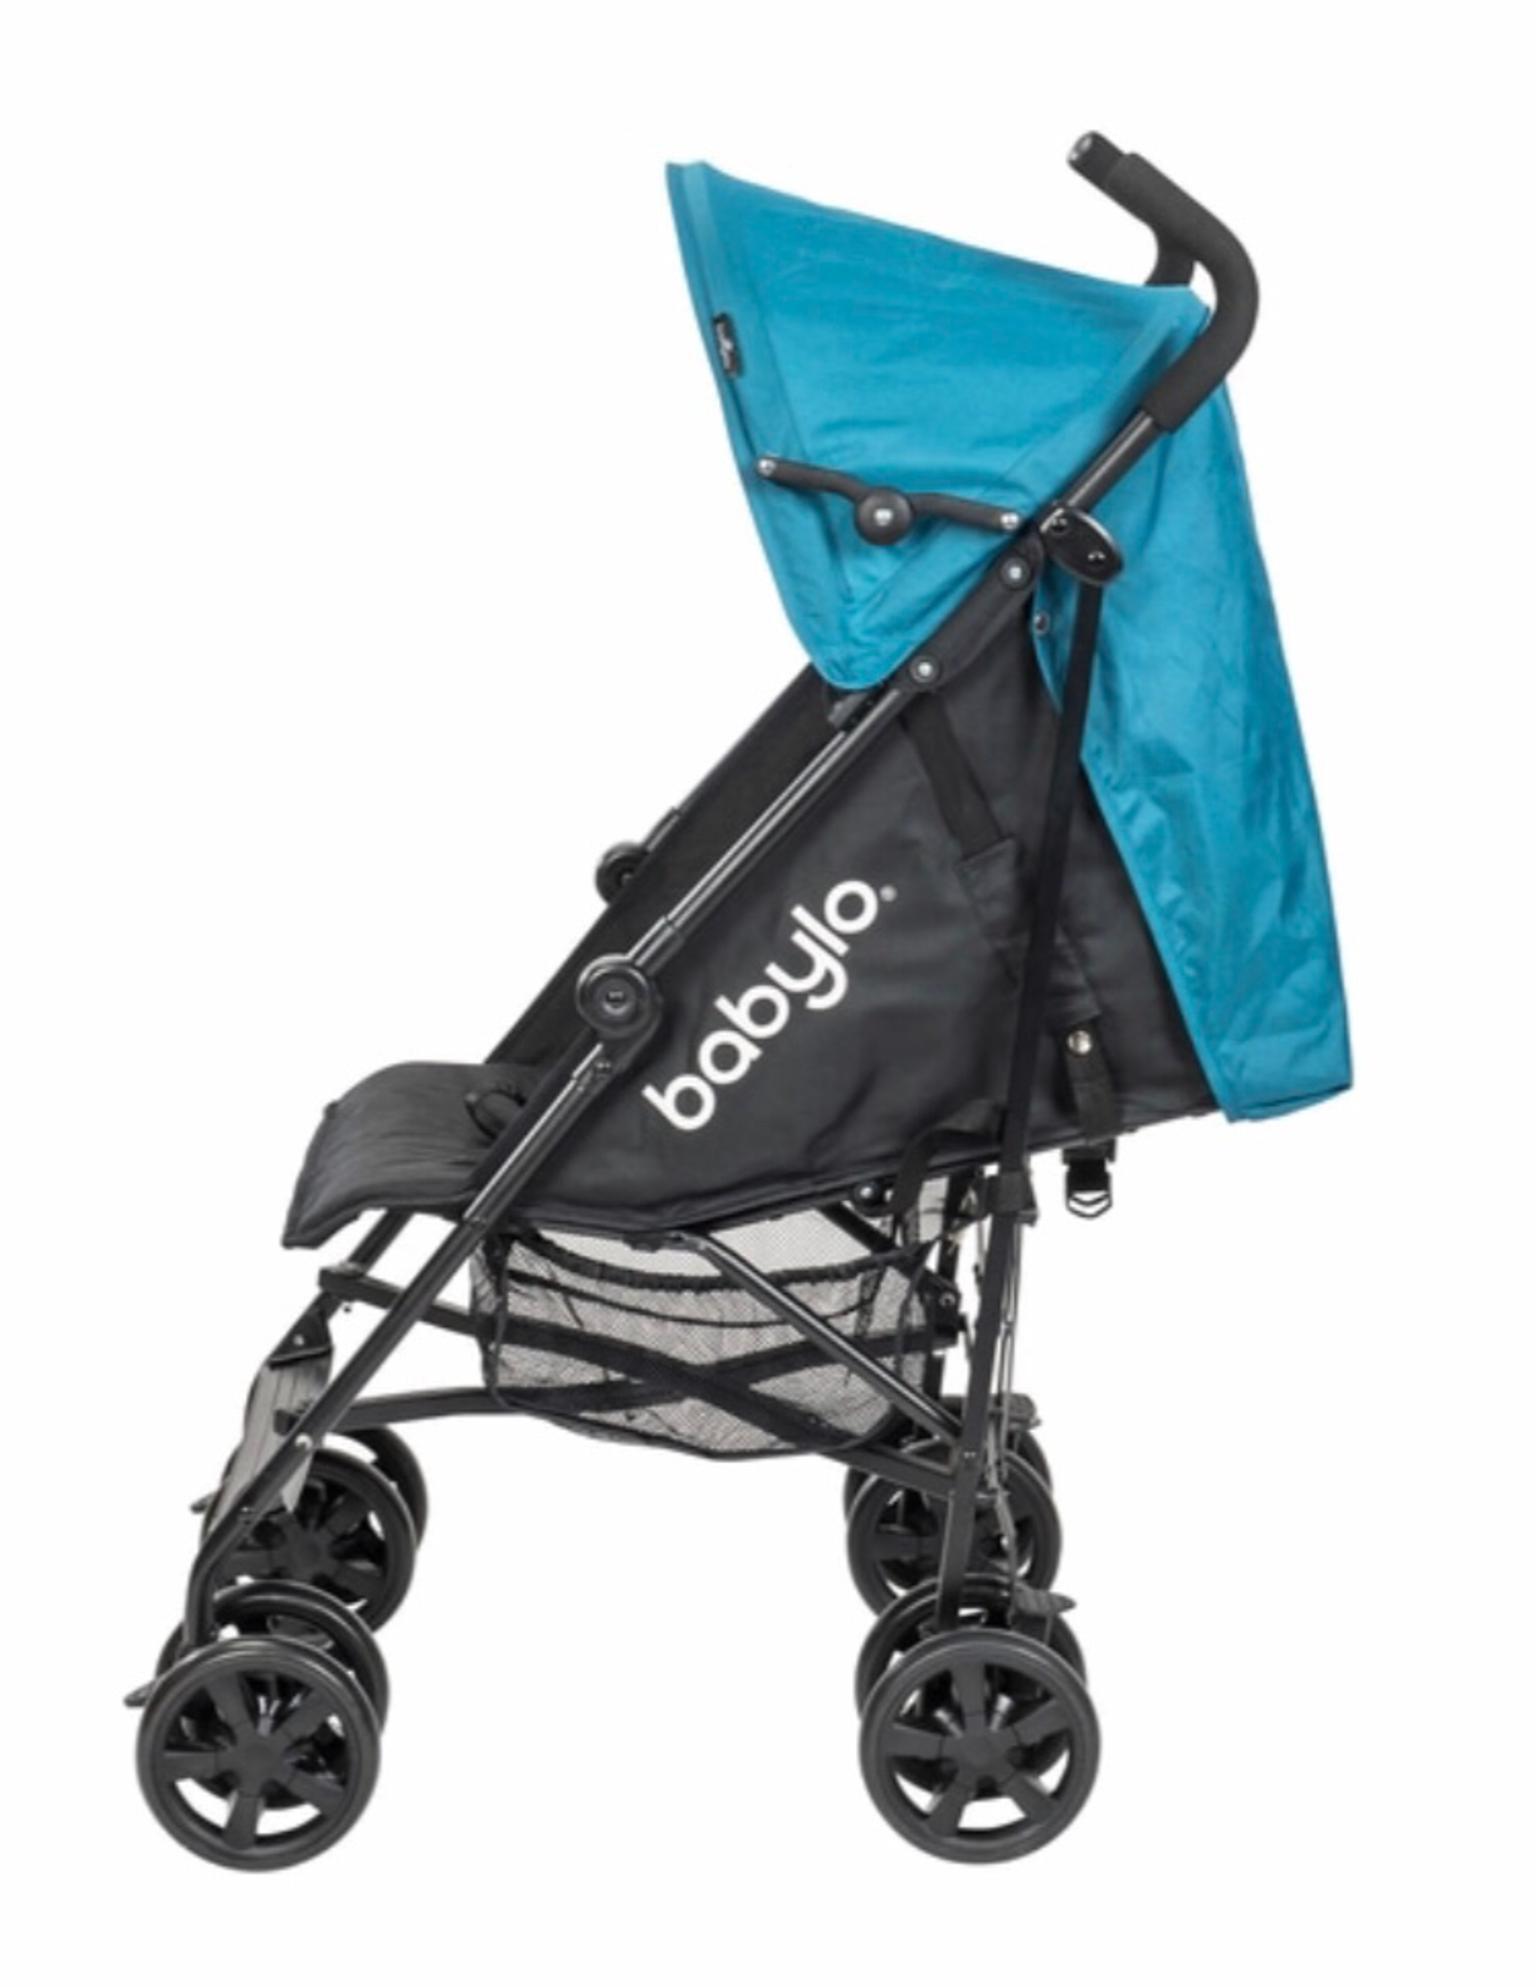 keyfit 30 stroller adapter